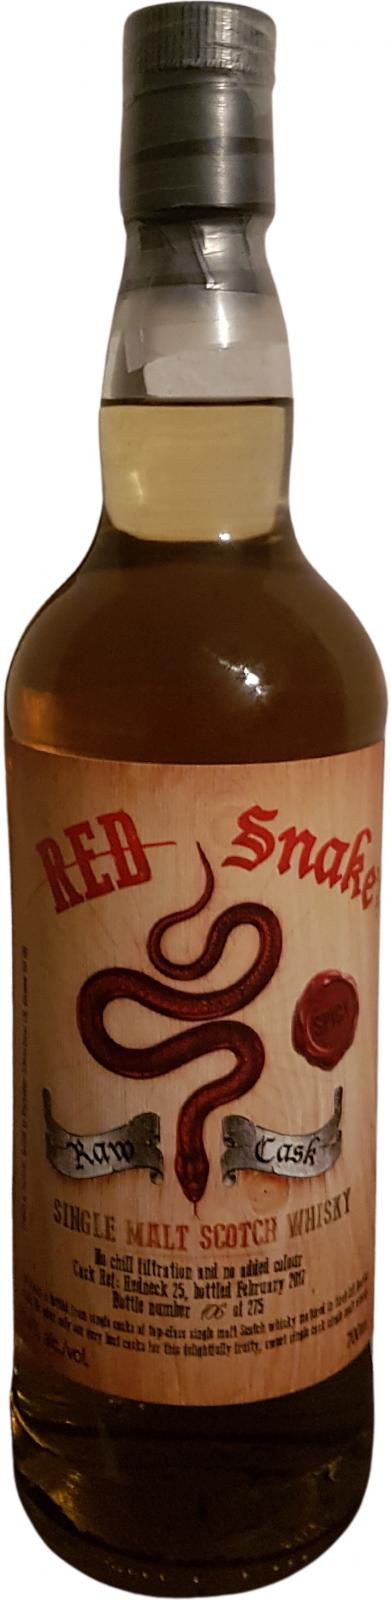 Red Snake NAS BA Raw Cask Redneck 25 60.4% 700ml